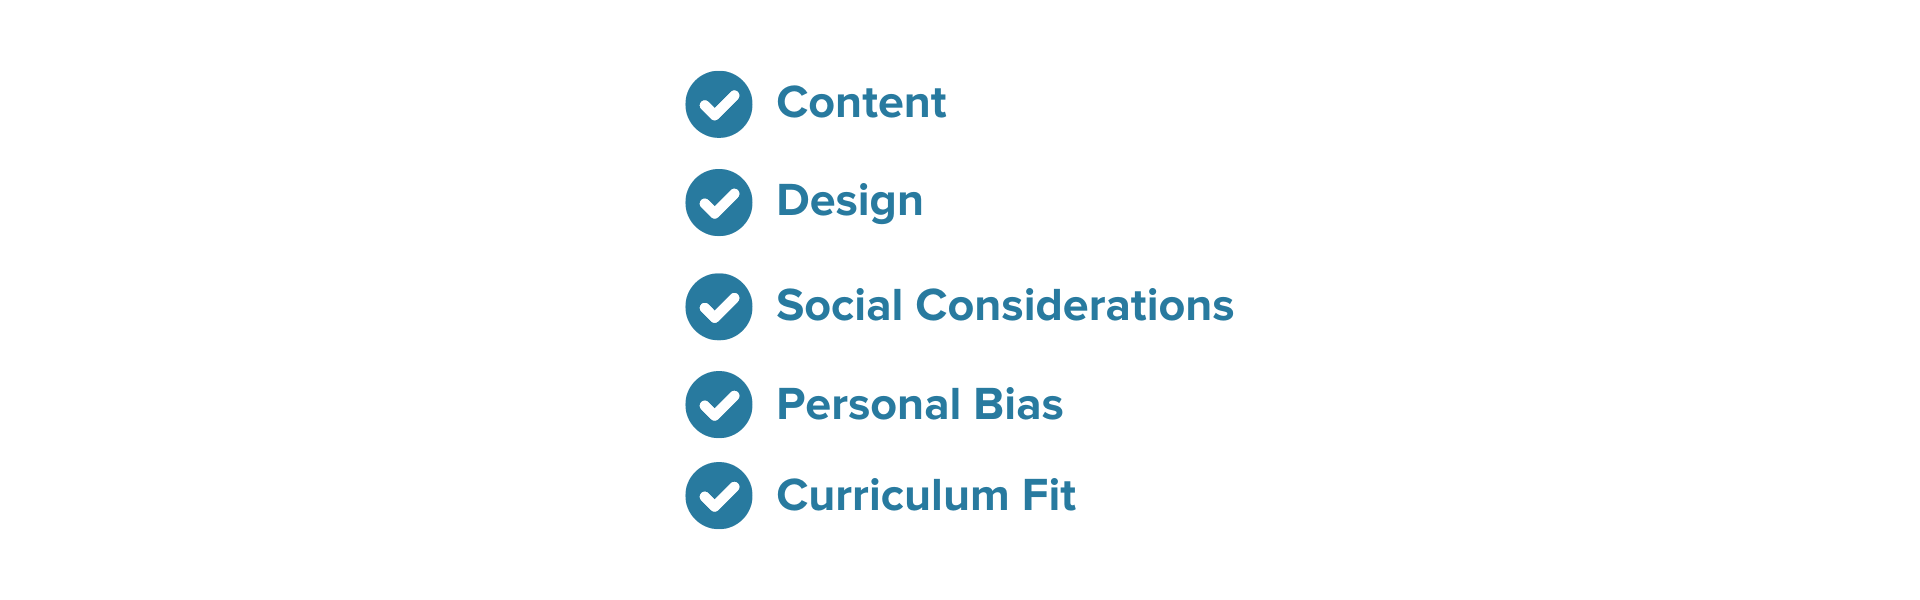 content, design, social considerations, personal bias, curriculum fit